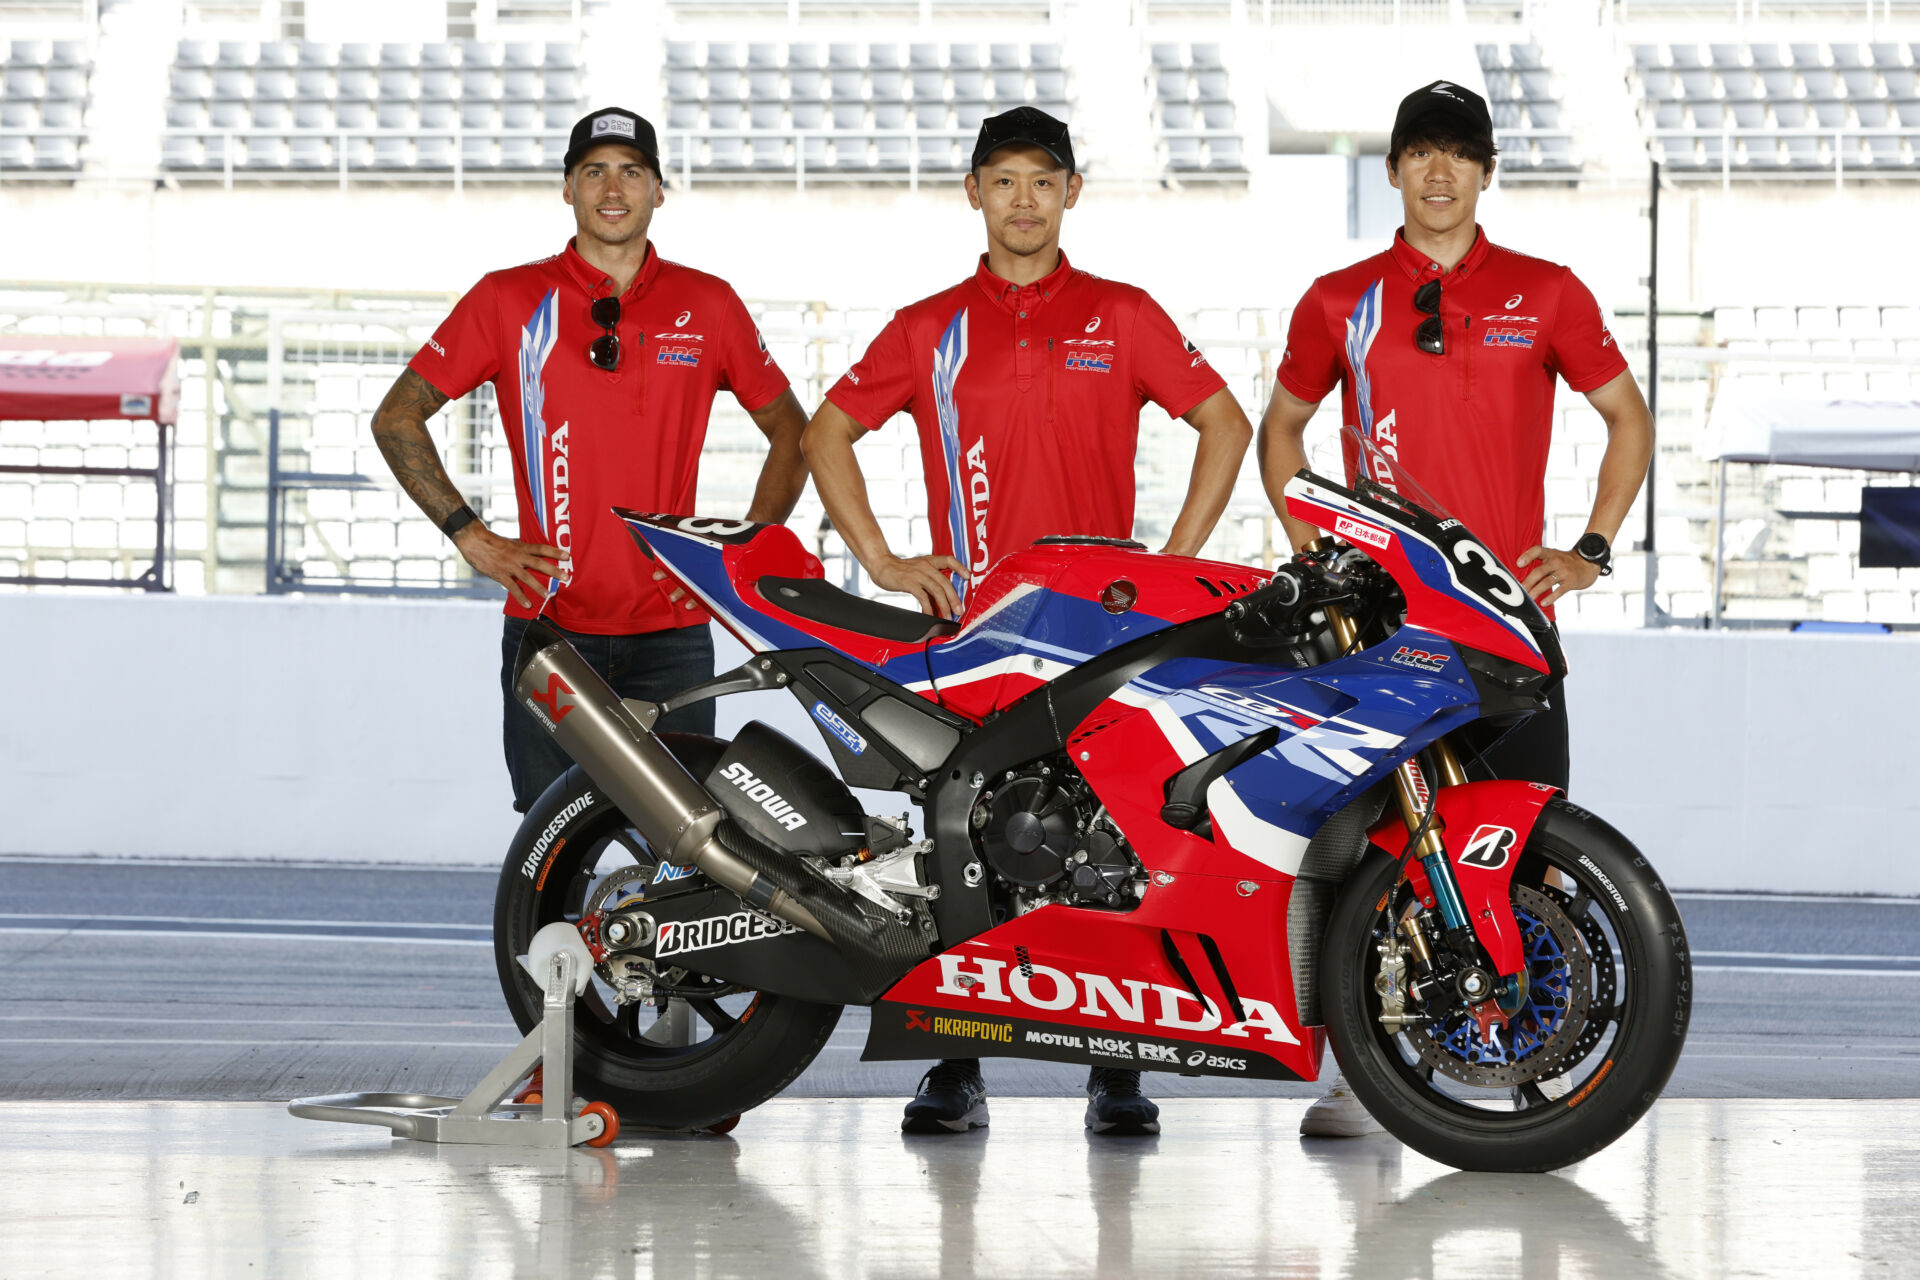 Team HRC with Japan Post riders (from left) Xavi Vierge, Takumi Takahashi, and Tetsuta Nagashima. Photo courtesy HRC.